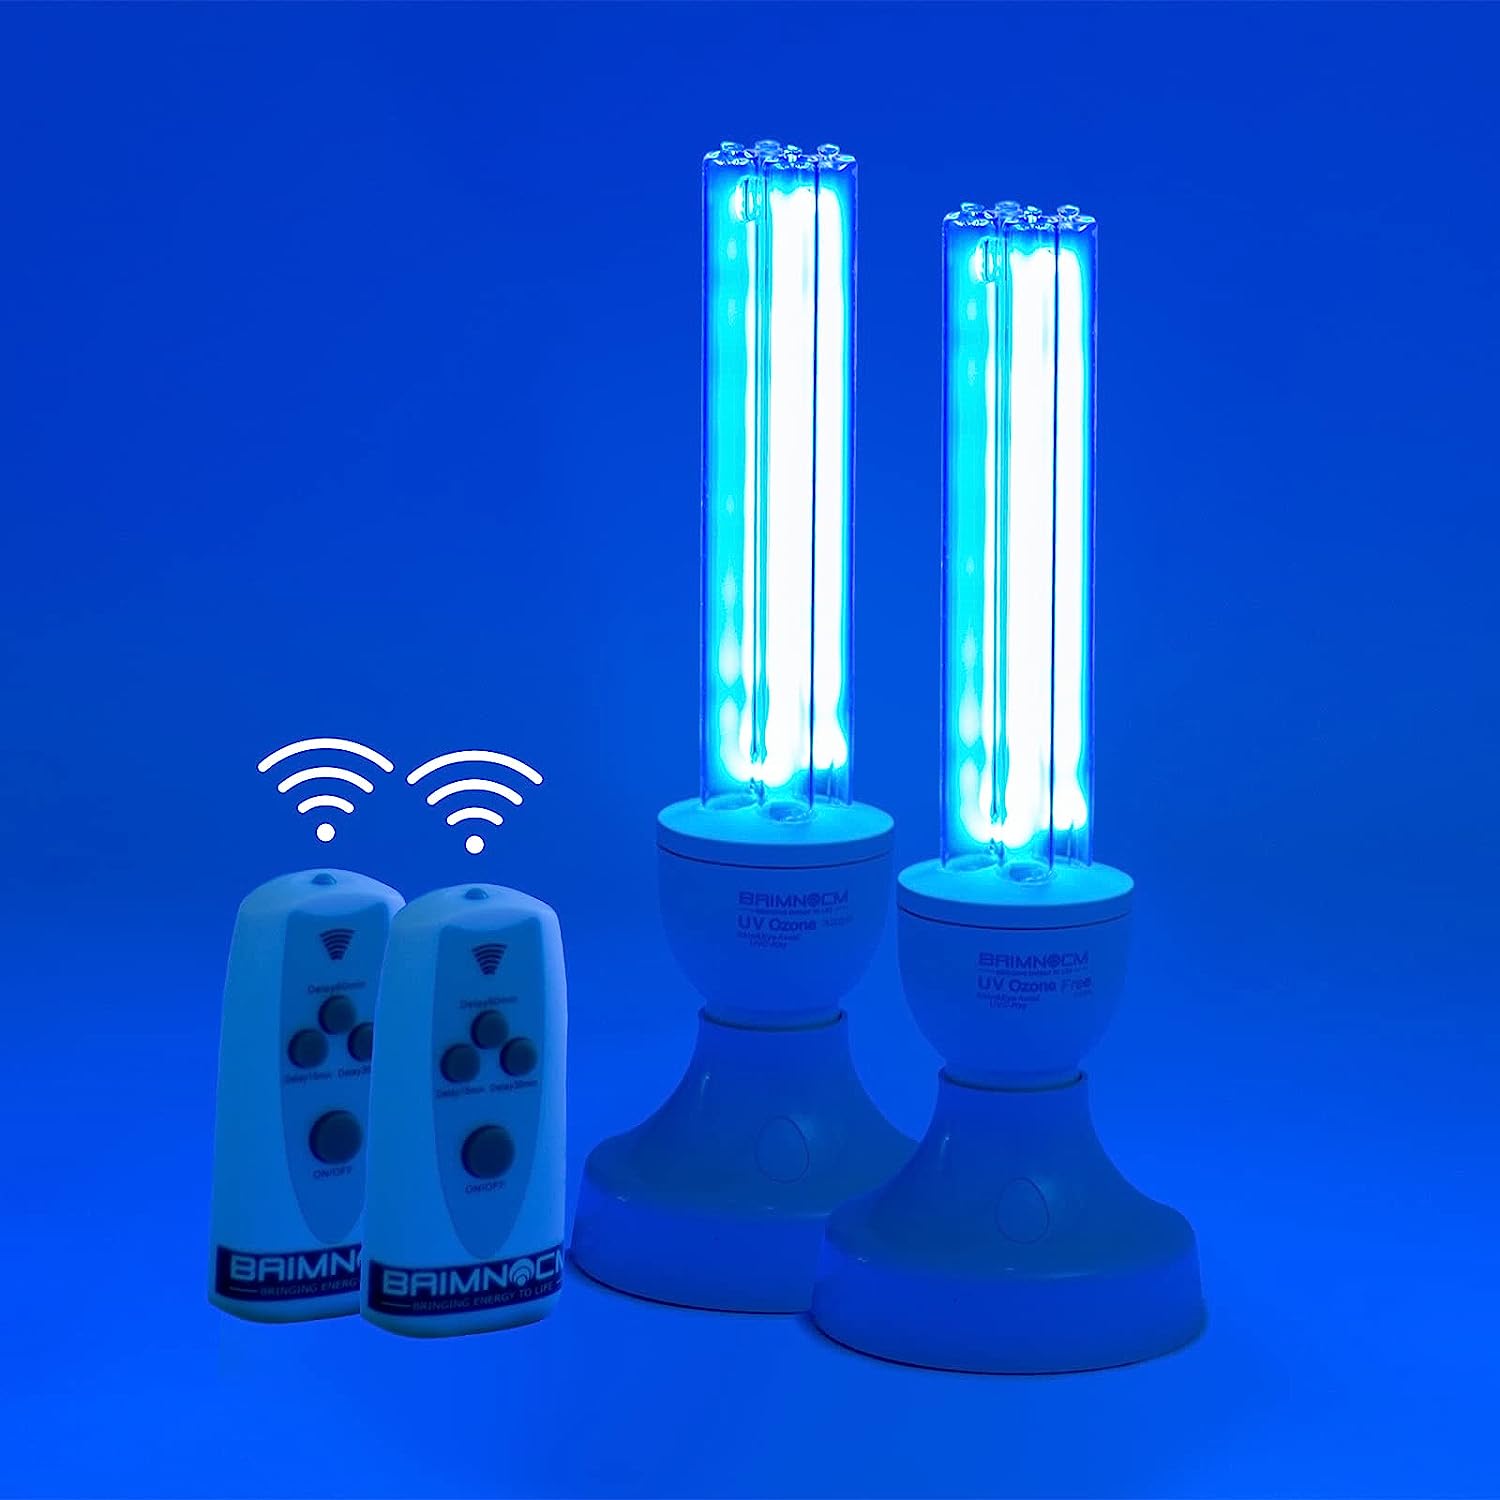 BAIMNOCM 50 Watt UV Light Sanitizer, UVC Germicidal [...]